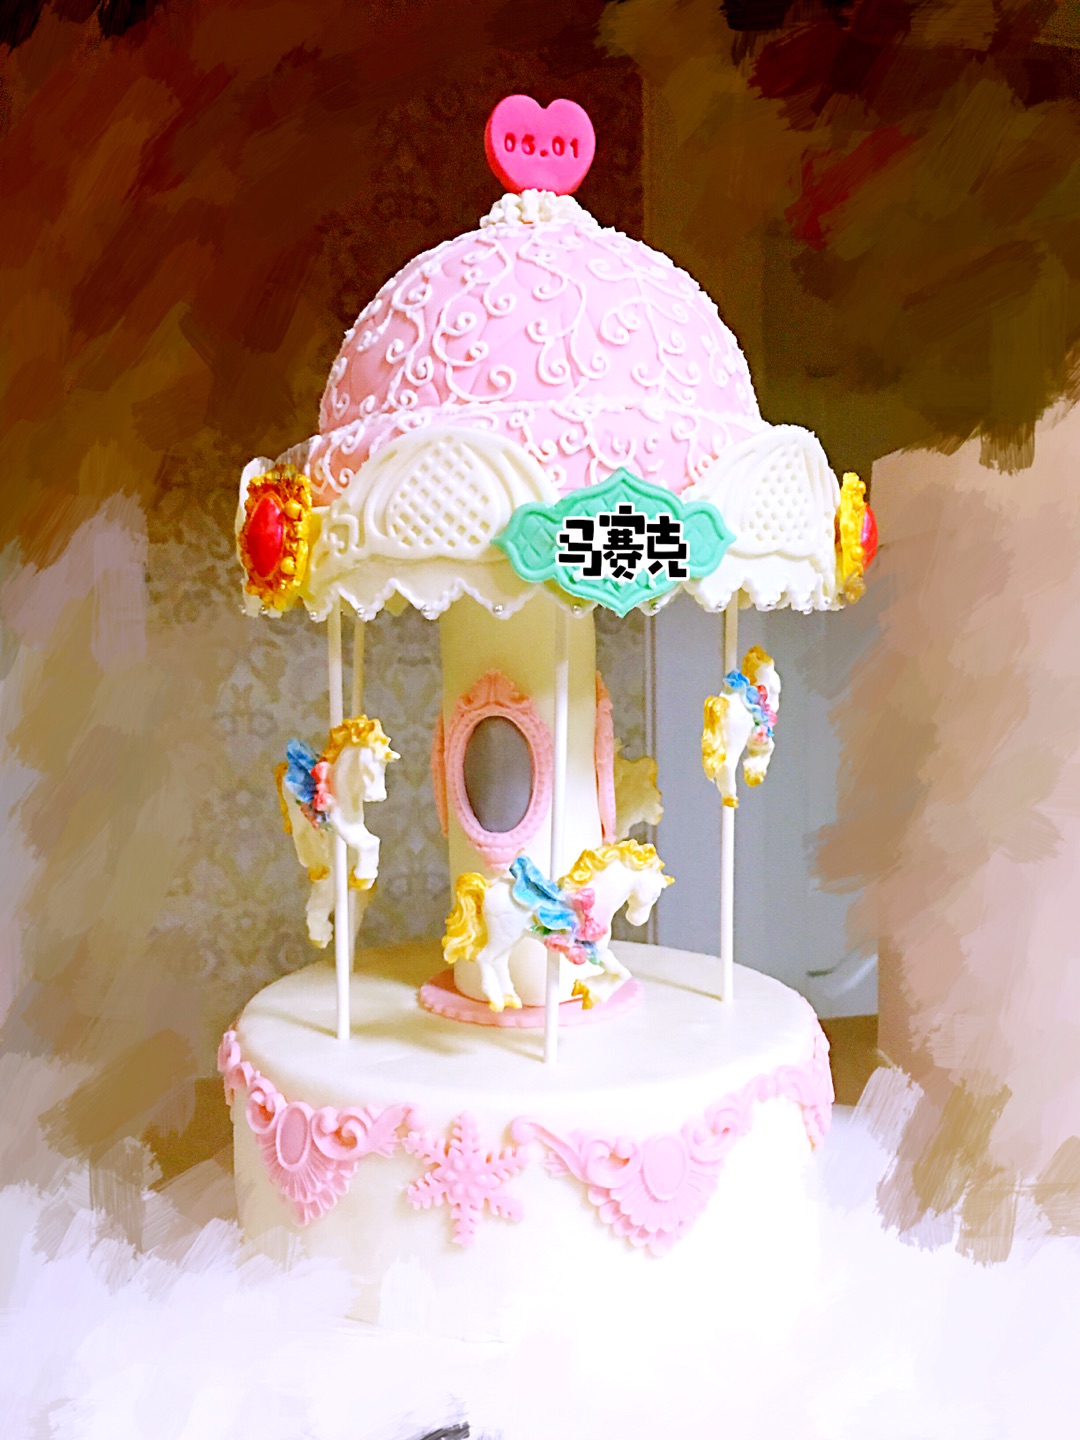 Grace's Blog 欣语心情: 旋转木马生日蛋糕 Carousel Birthday Cake